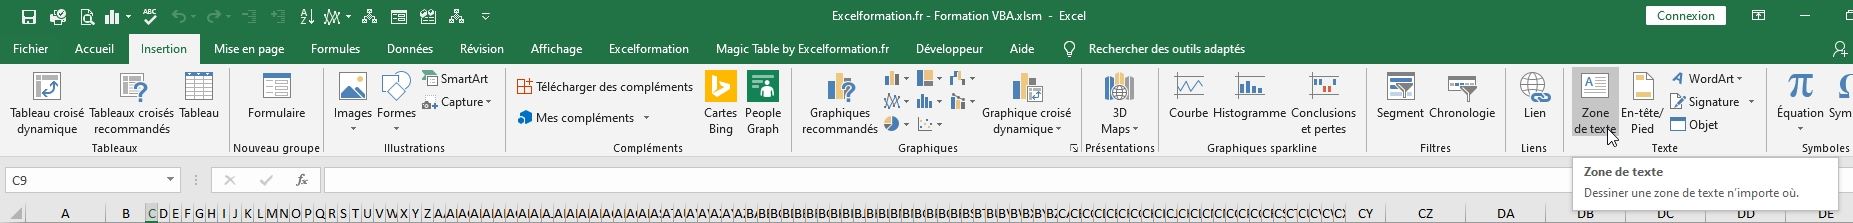 Excel formation - VBA28 vba type personnalisé 3 - 08